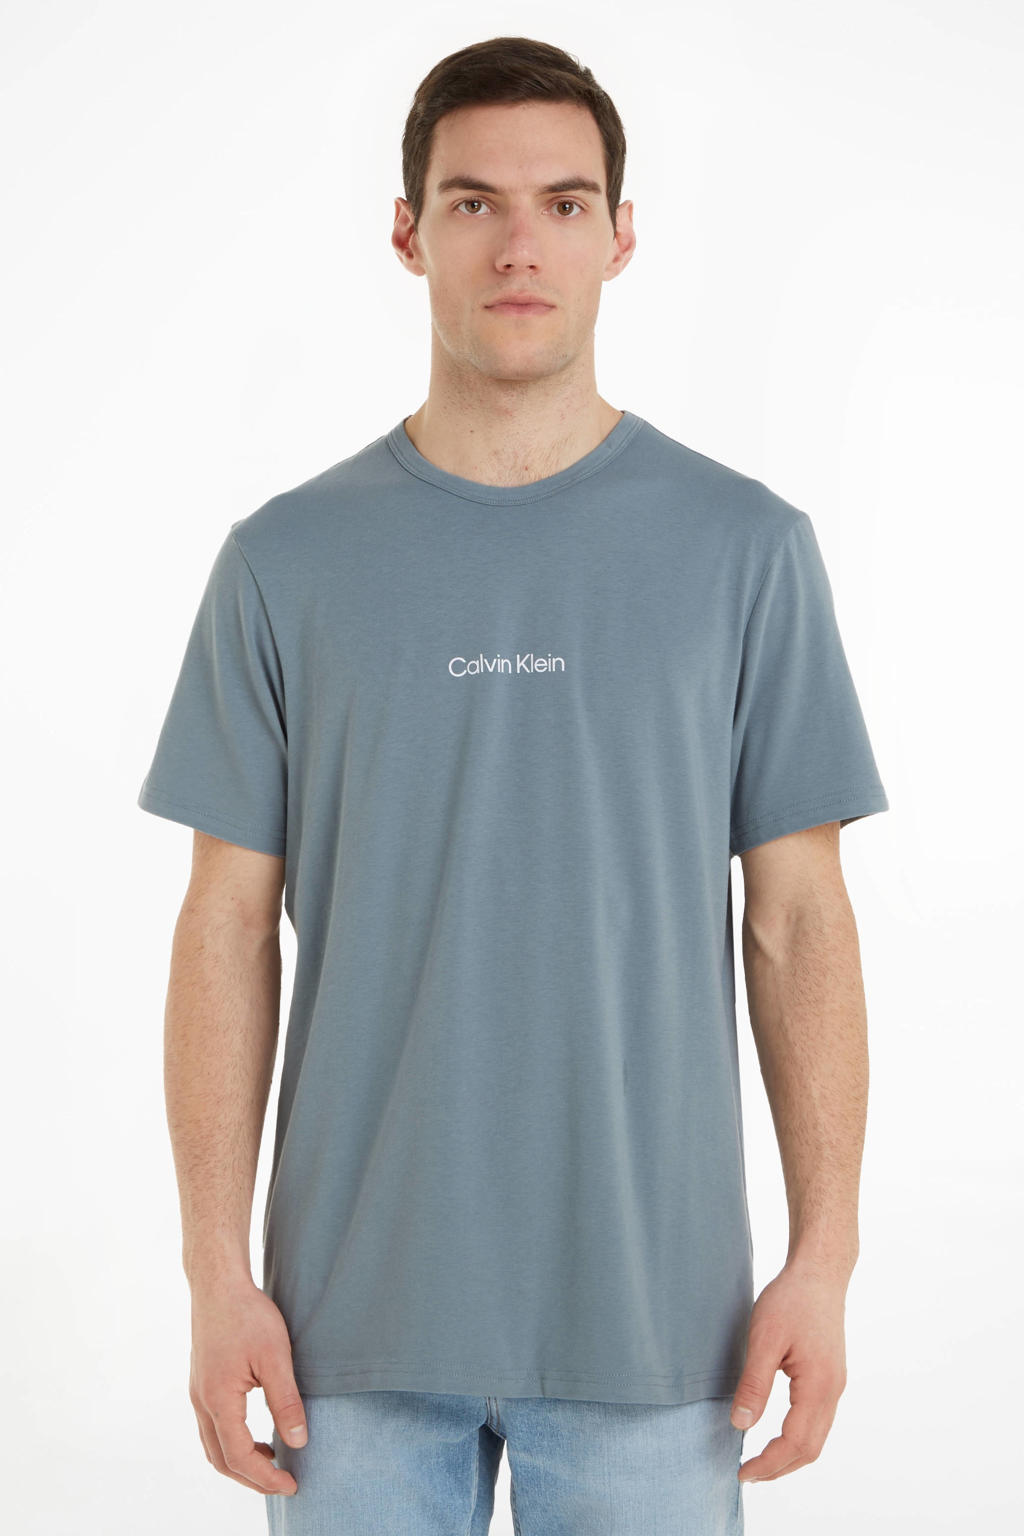 Calvin Klein pyjamatop grijsblauw